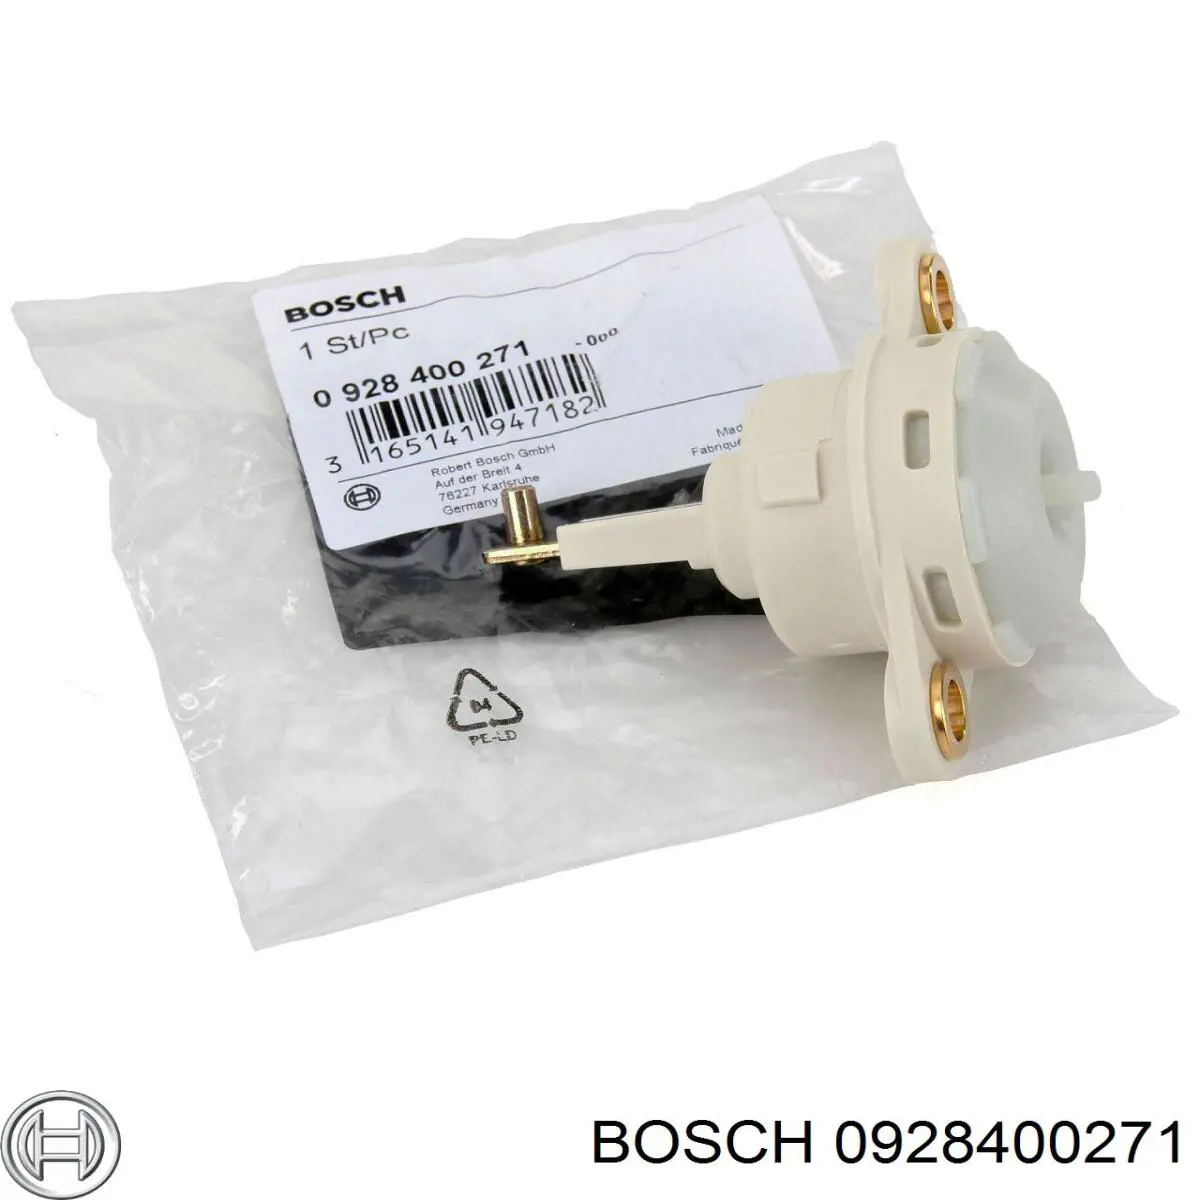 0928400271 Bosch válvula da bomba de combustível de pressão alta de corte de combustível (diesel-stop)